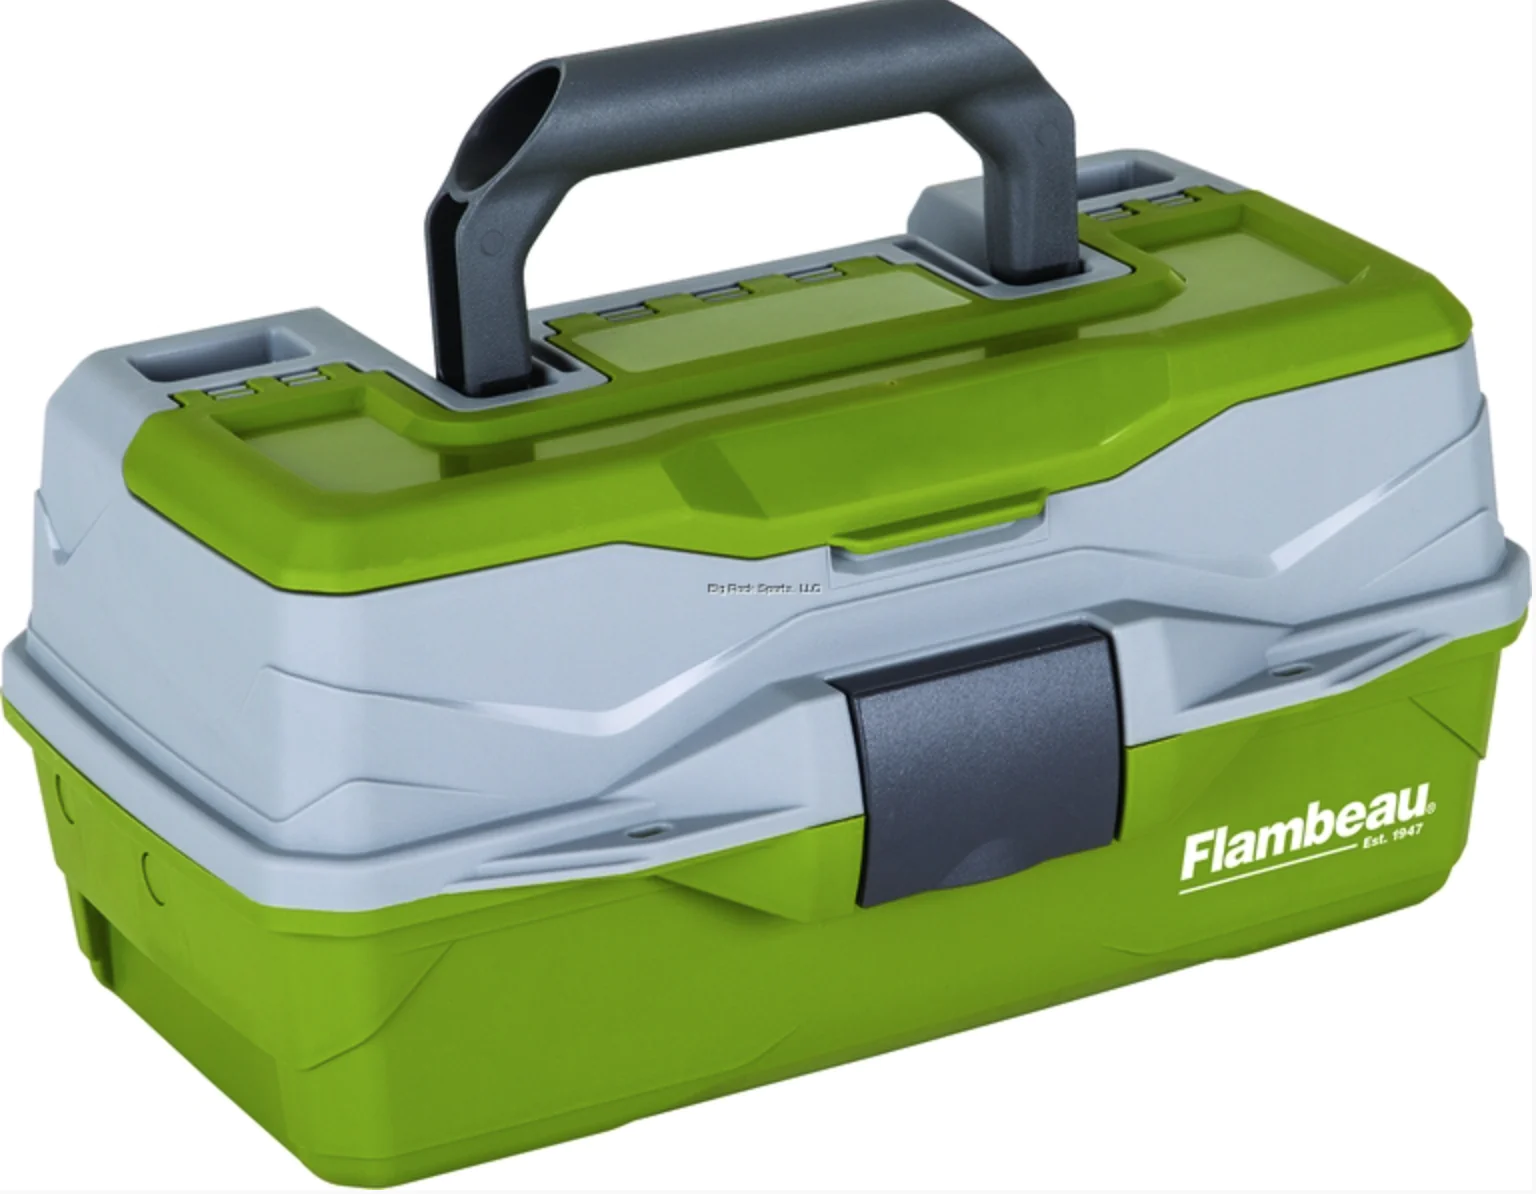 FLAMBEAU Classic 2-Tray Tackle Box